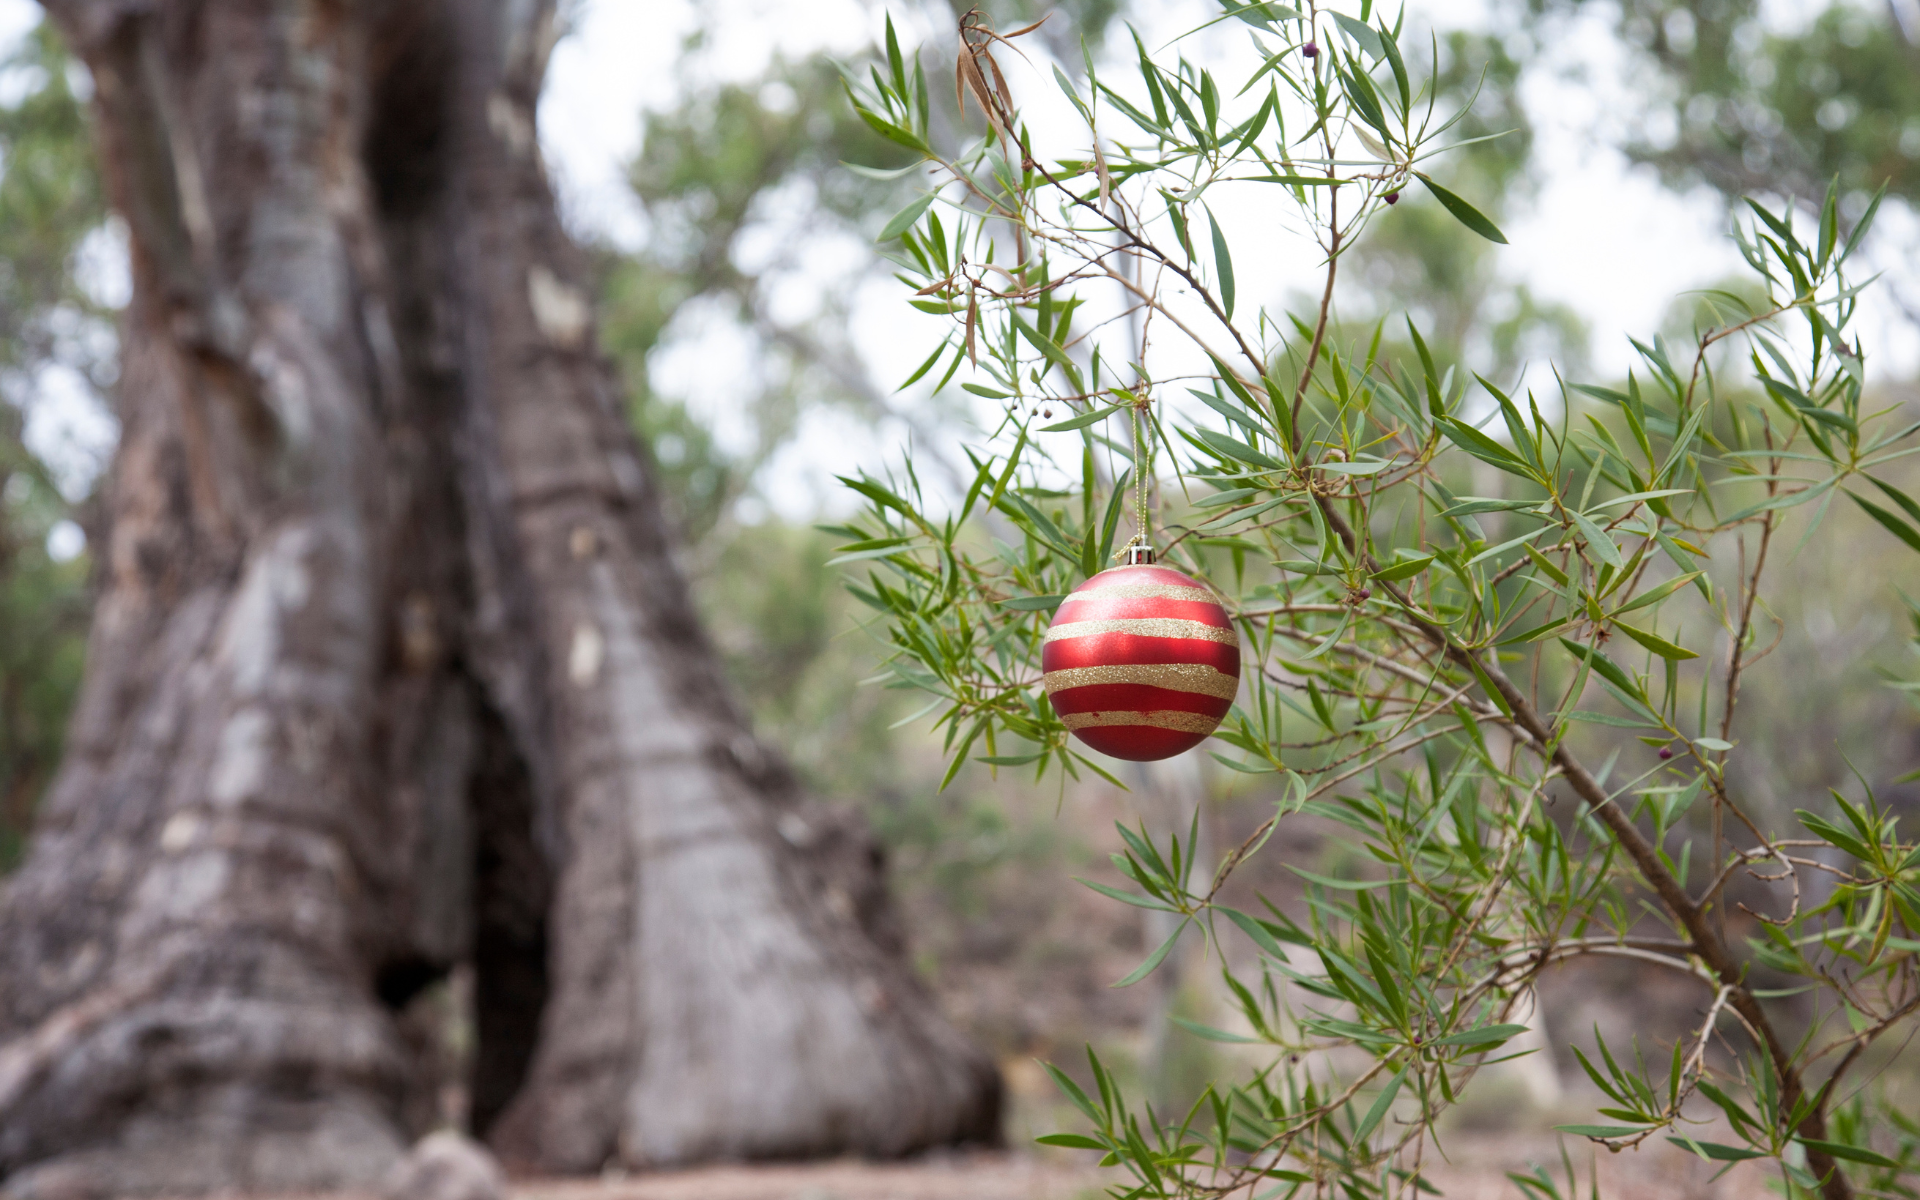 A Christmas bauble in the Australian bush